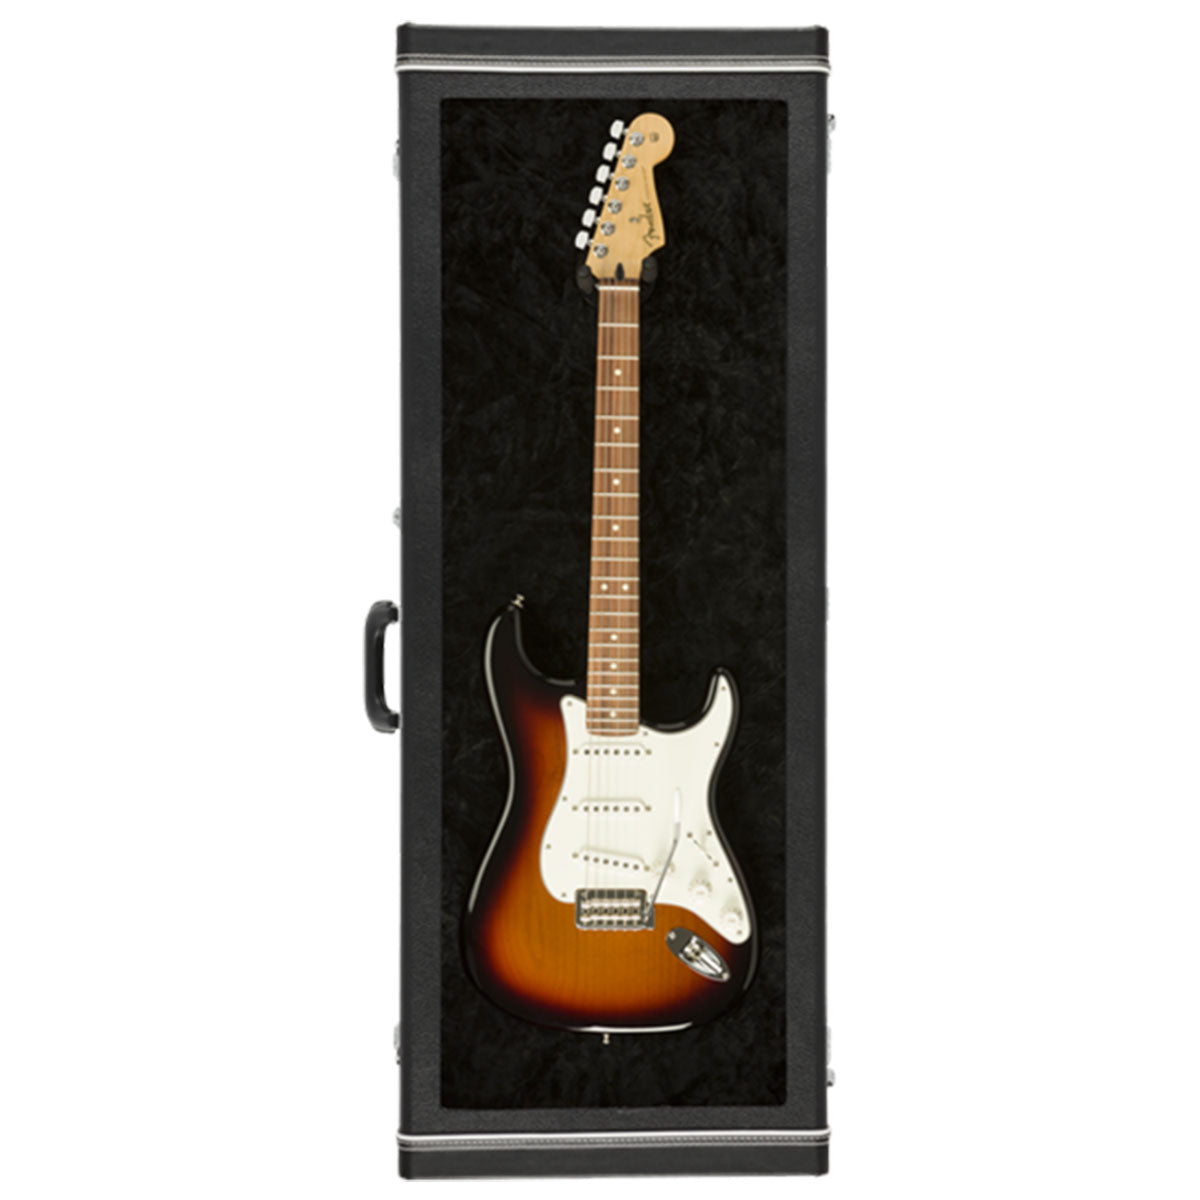 Fender Guitar Display Case Black - 0995000306